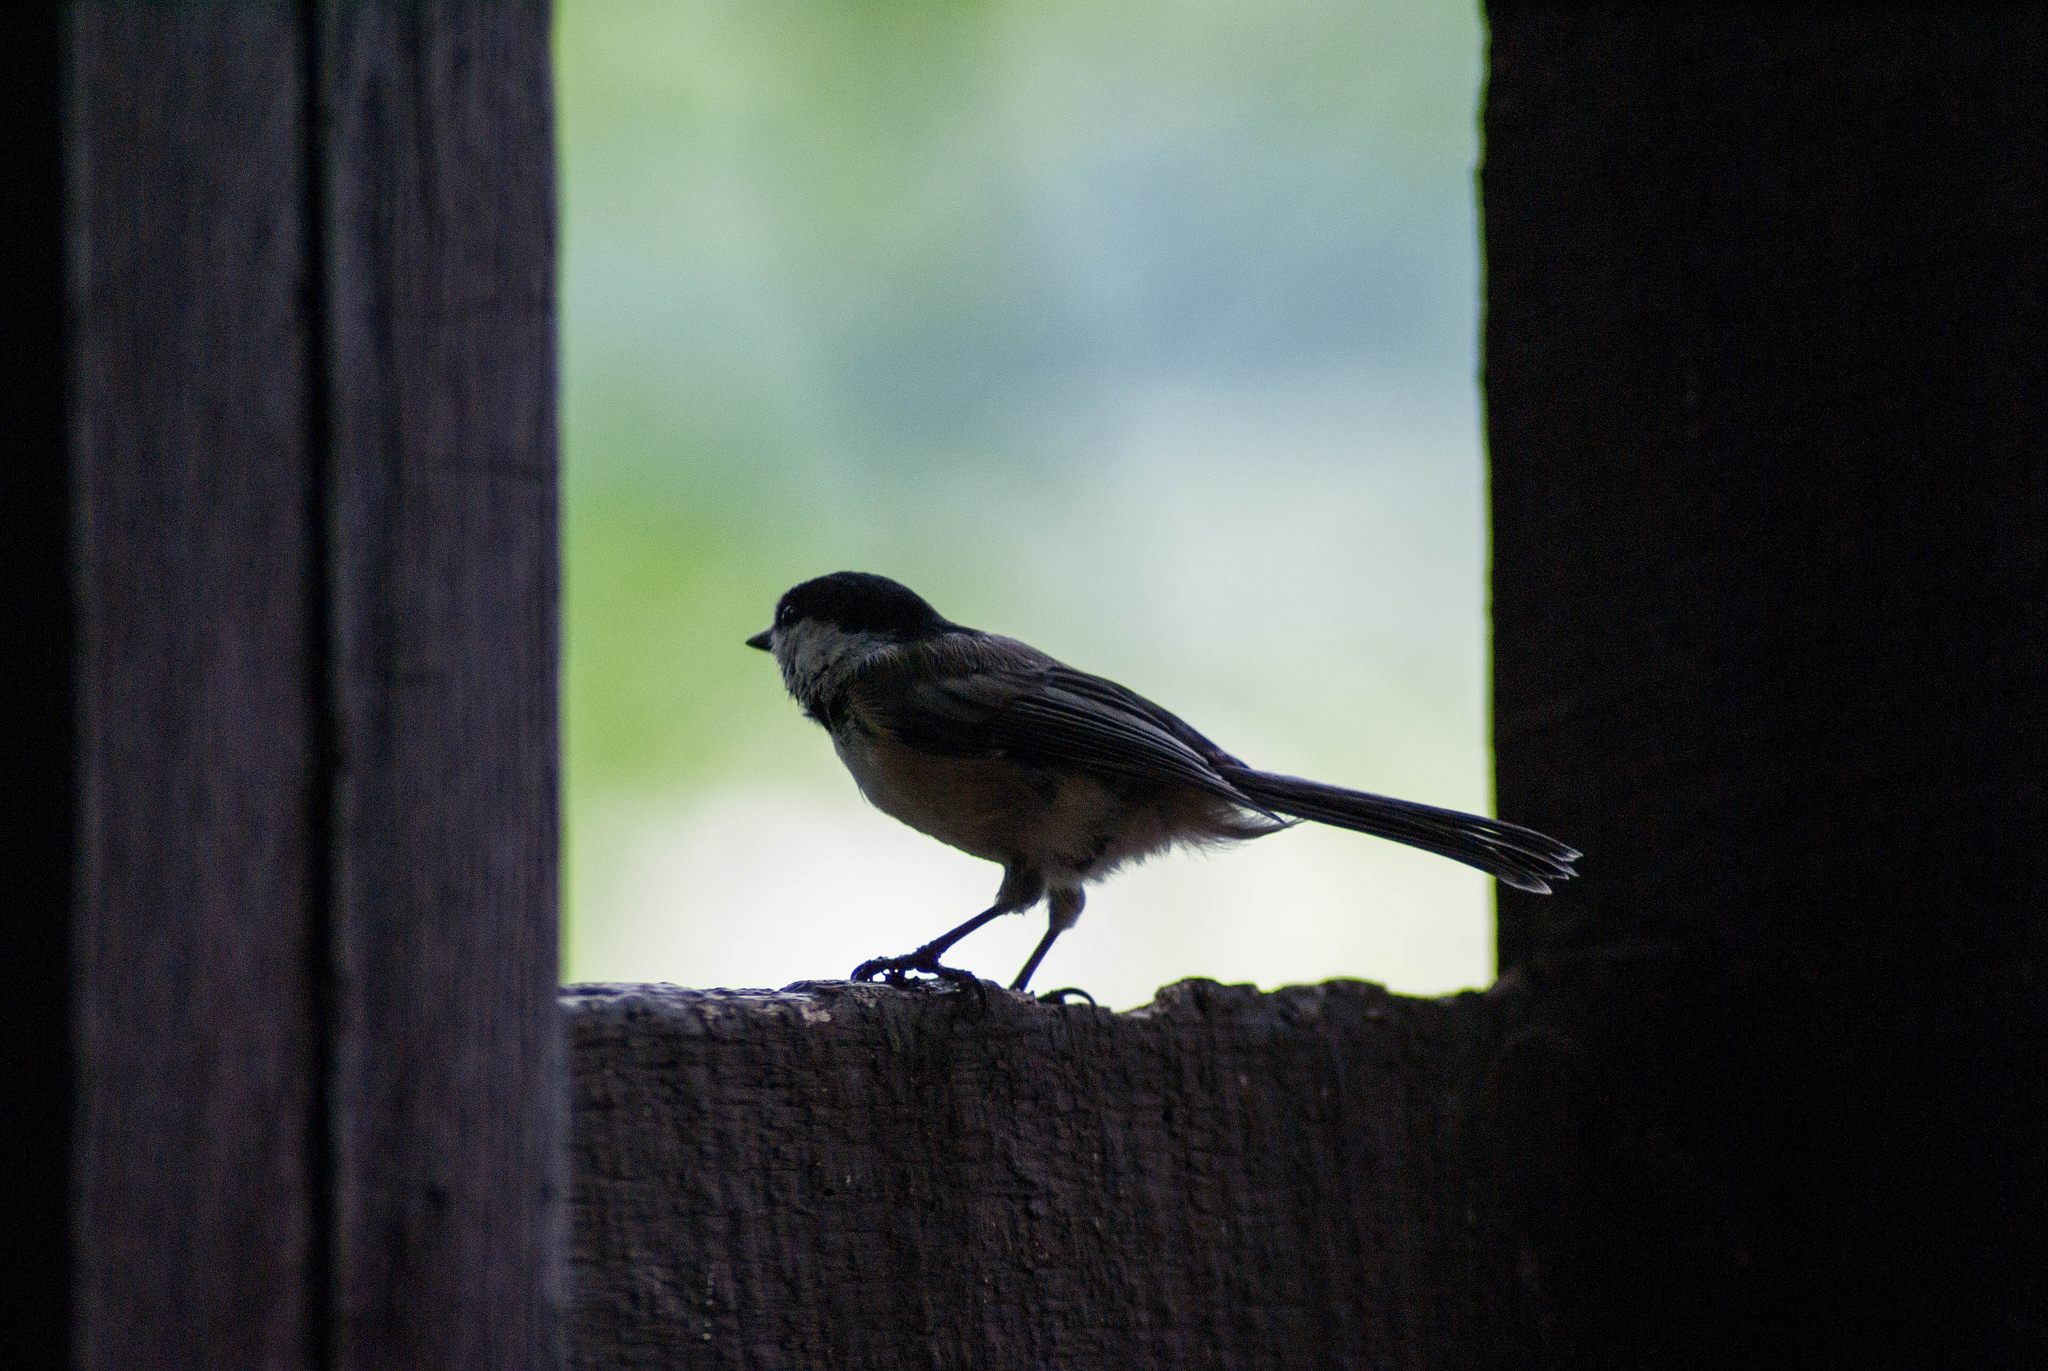 Small bird sits on wooden ledge peeking outdoors